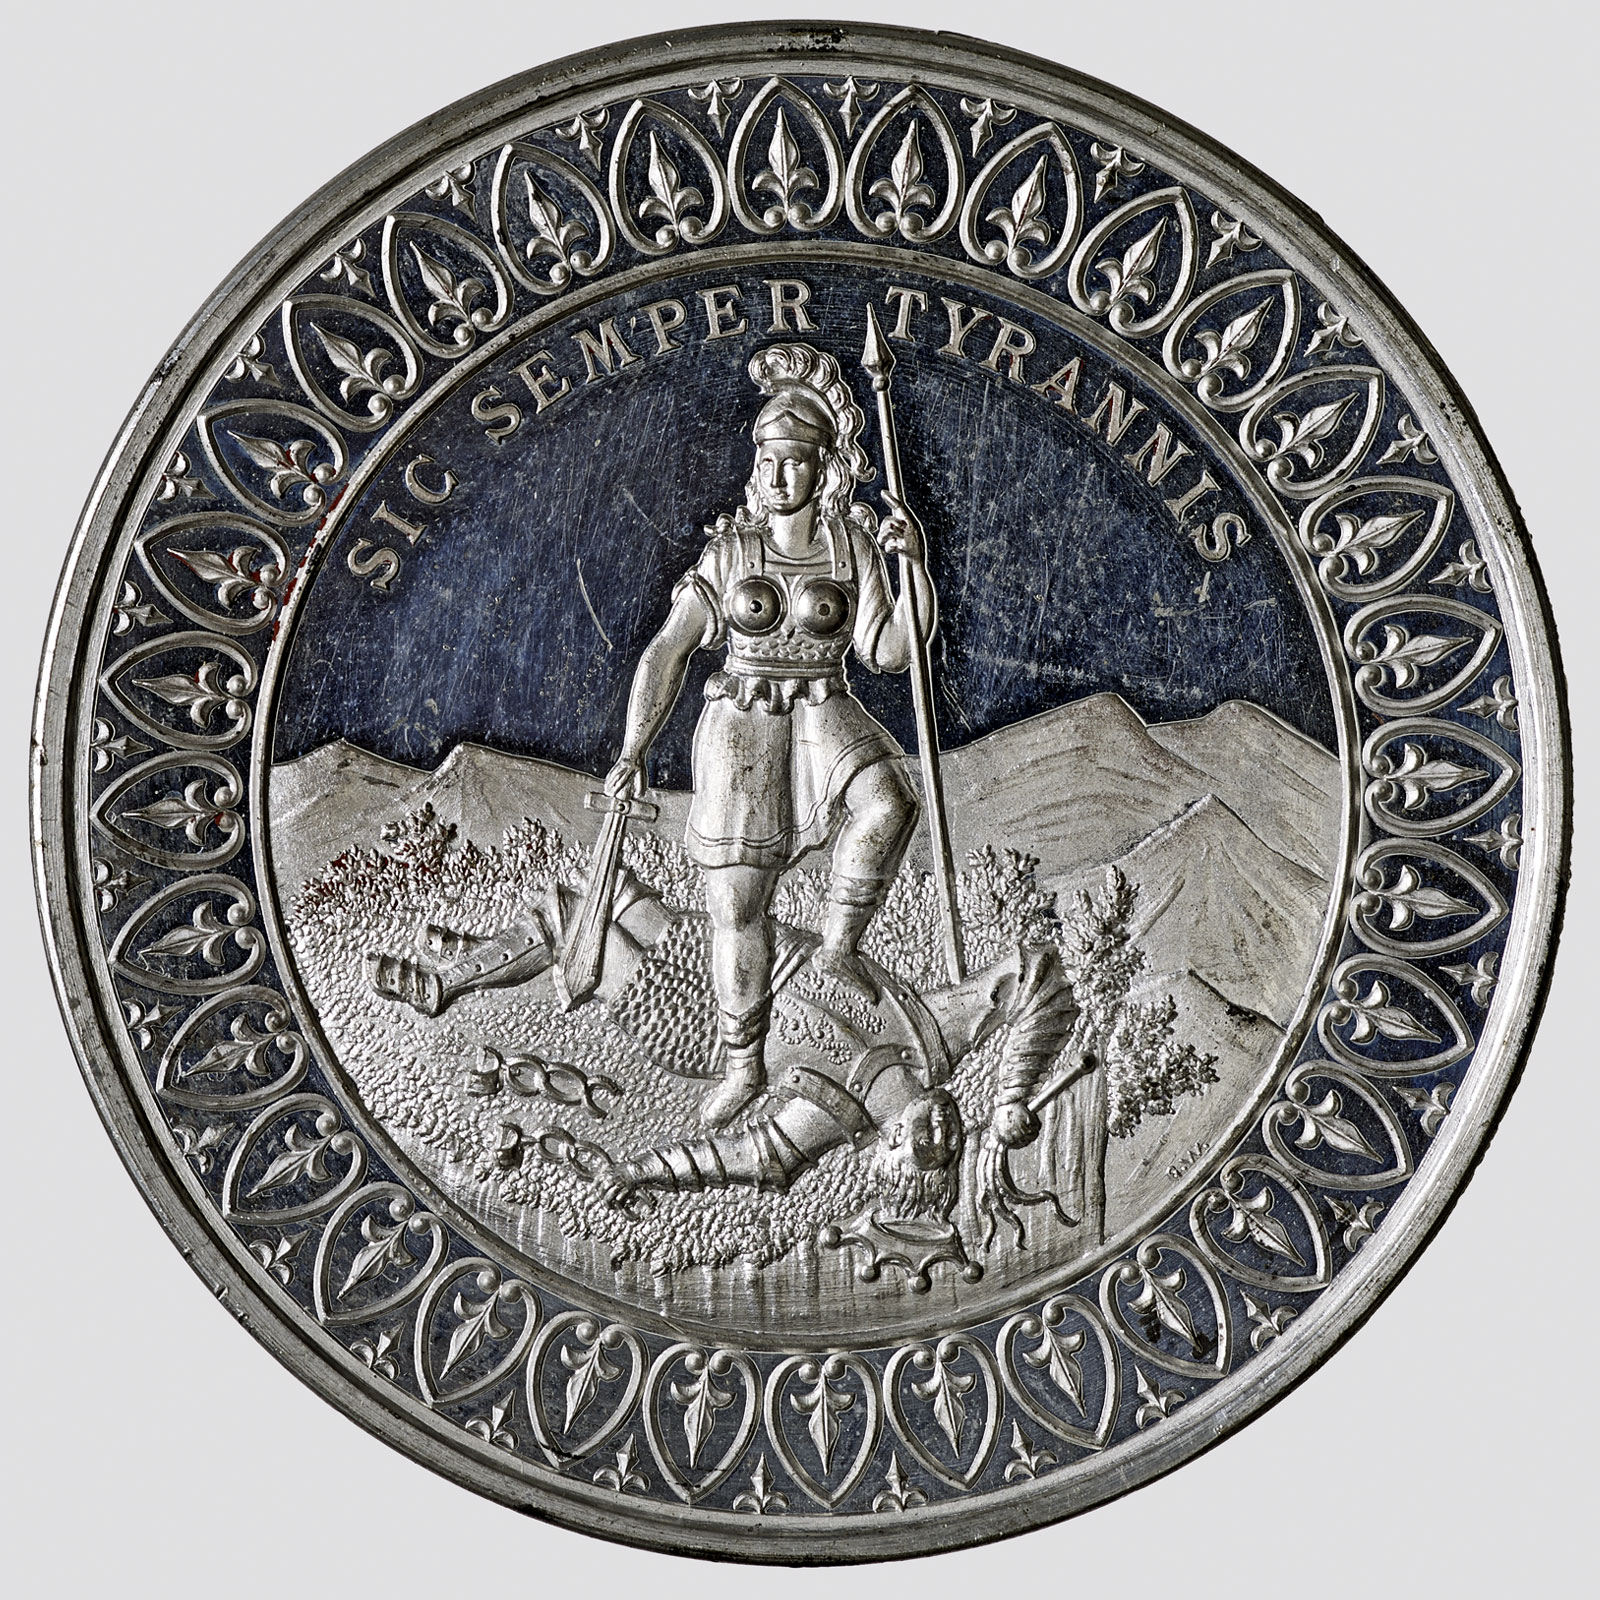 Civil War commemorative medallion